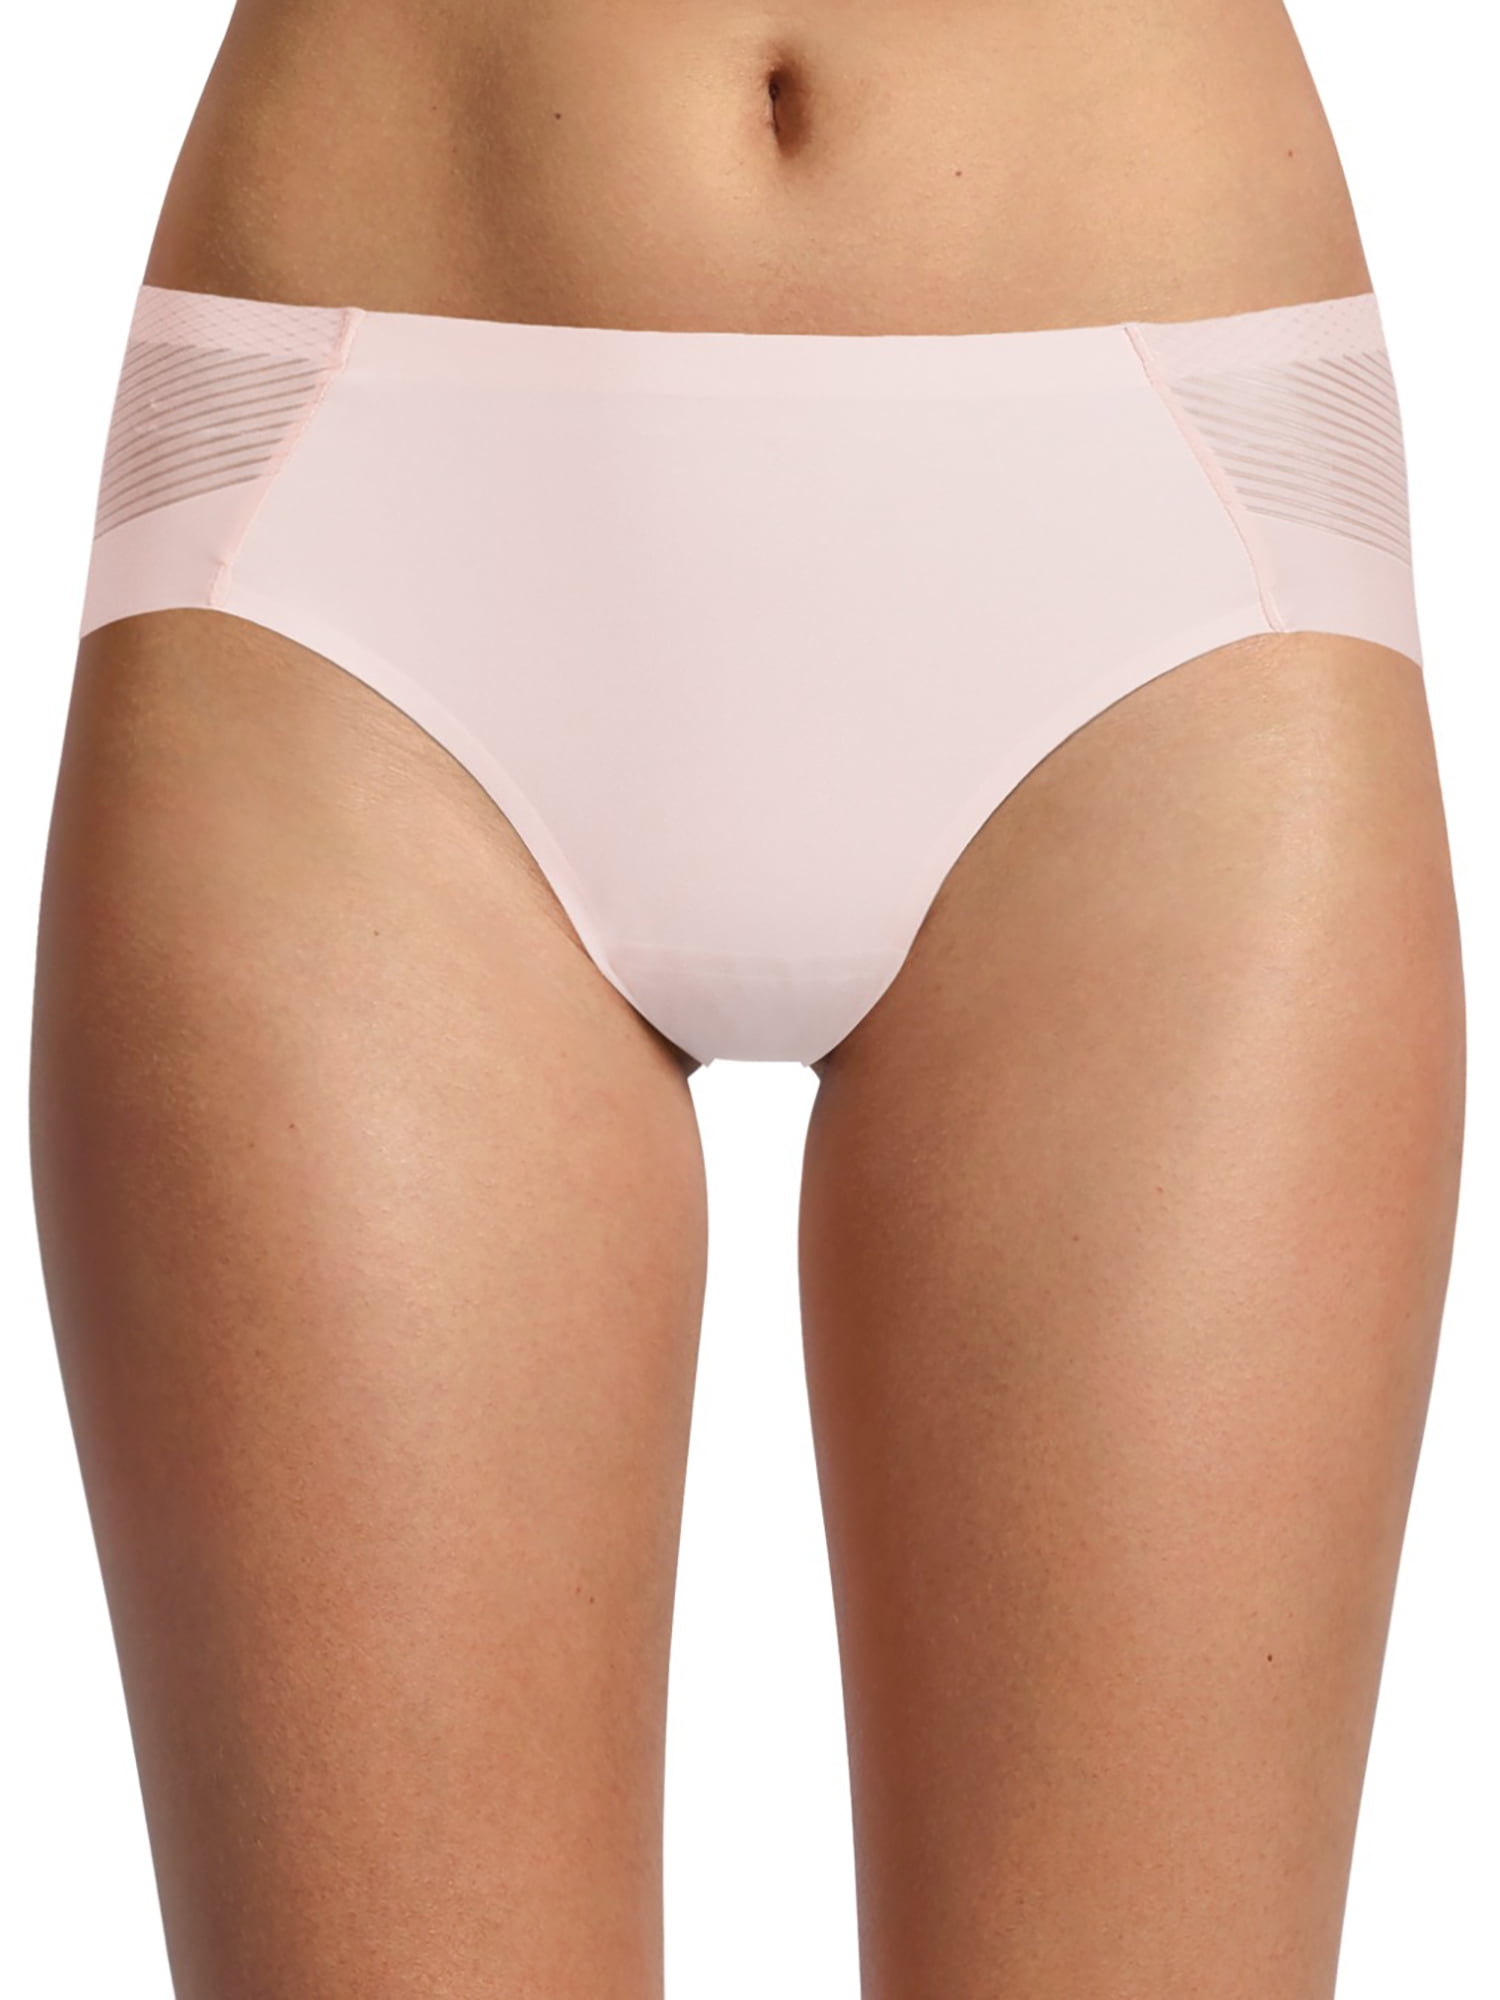 Yummie by Heather Thomson Women's Seamless Bikini Panties, 6 Pack